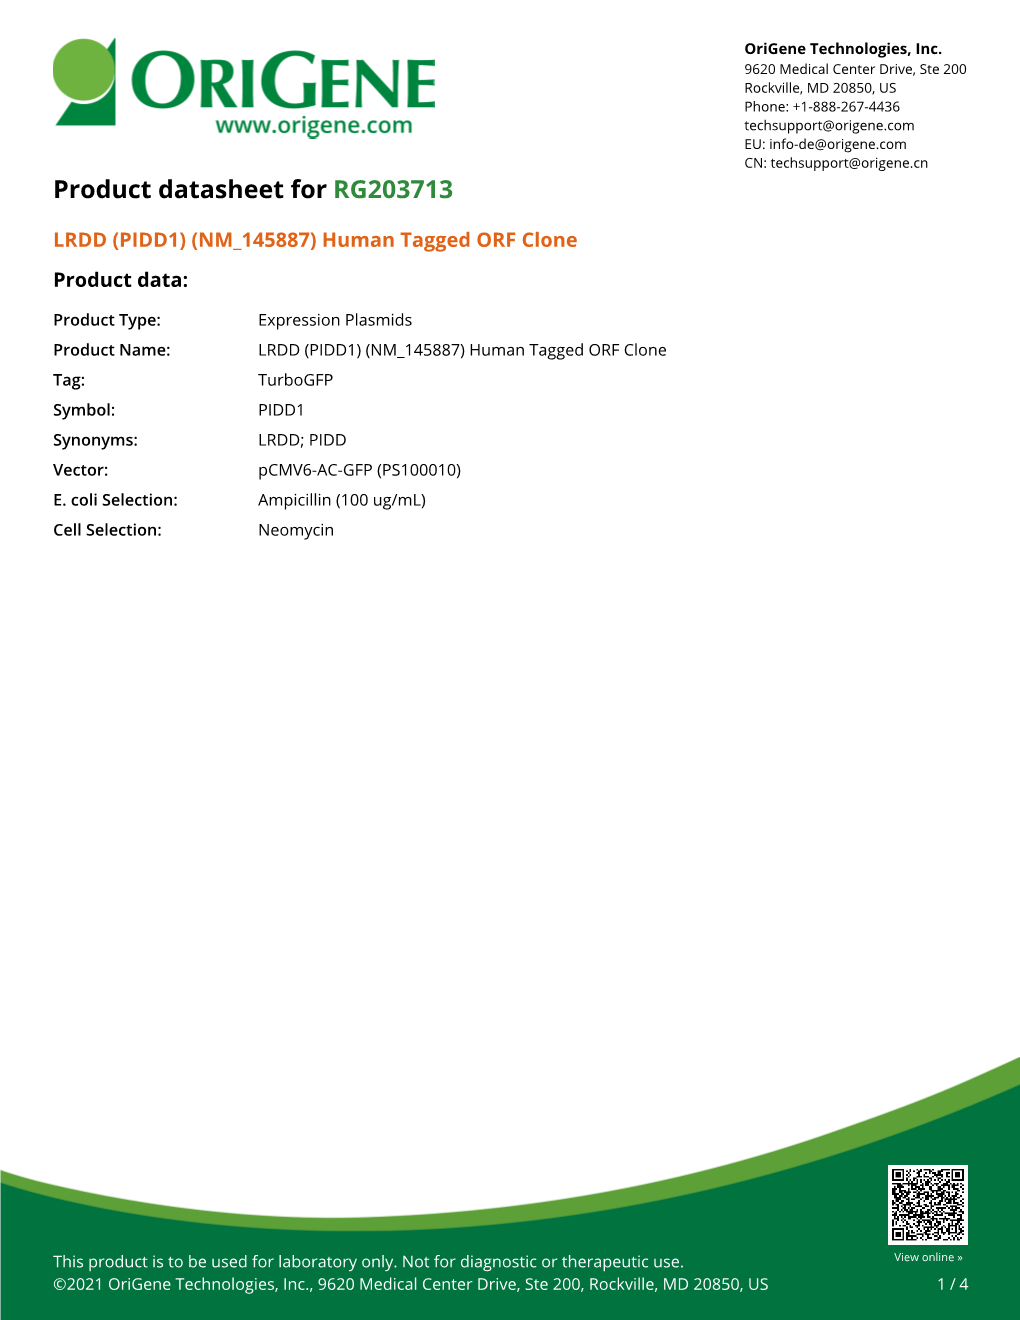 LRDD (PIDD1) (NM 145887) Human Tagged ORF Clone Product Data